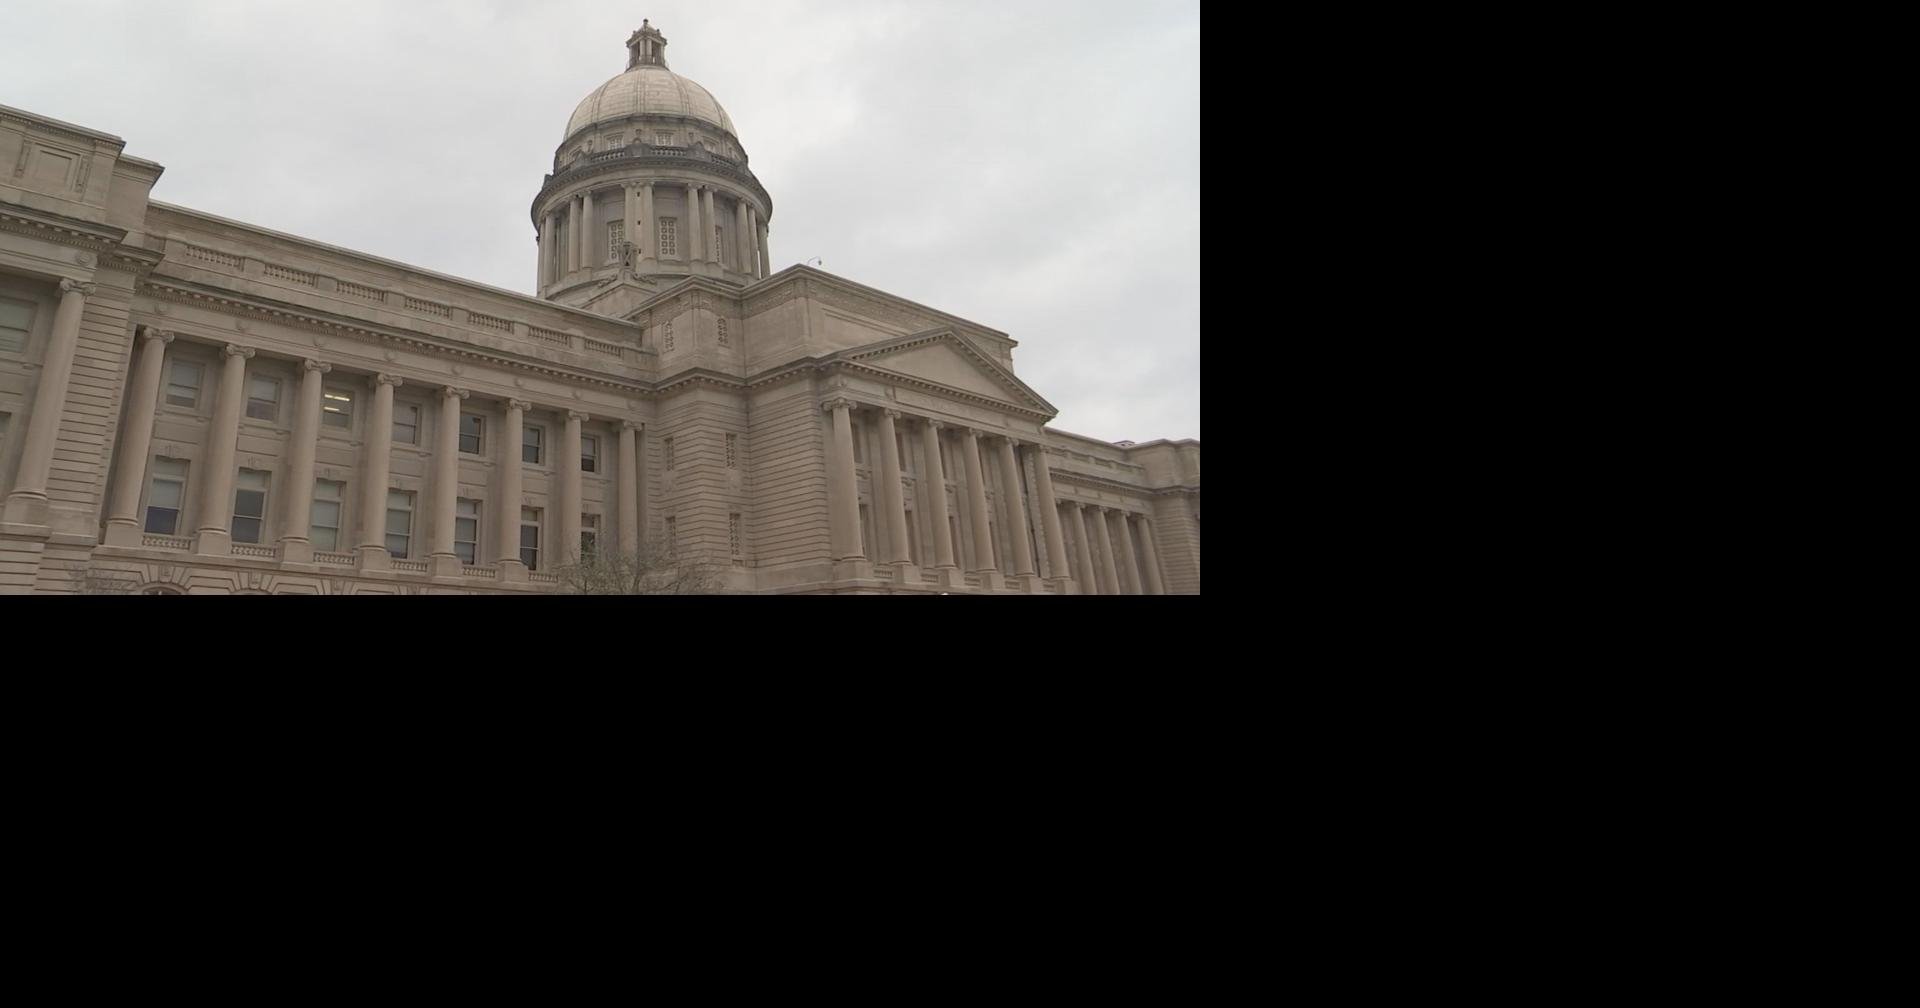 Kentucky legislators to vote on bills addressing hot button issues as